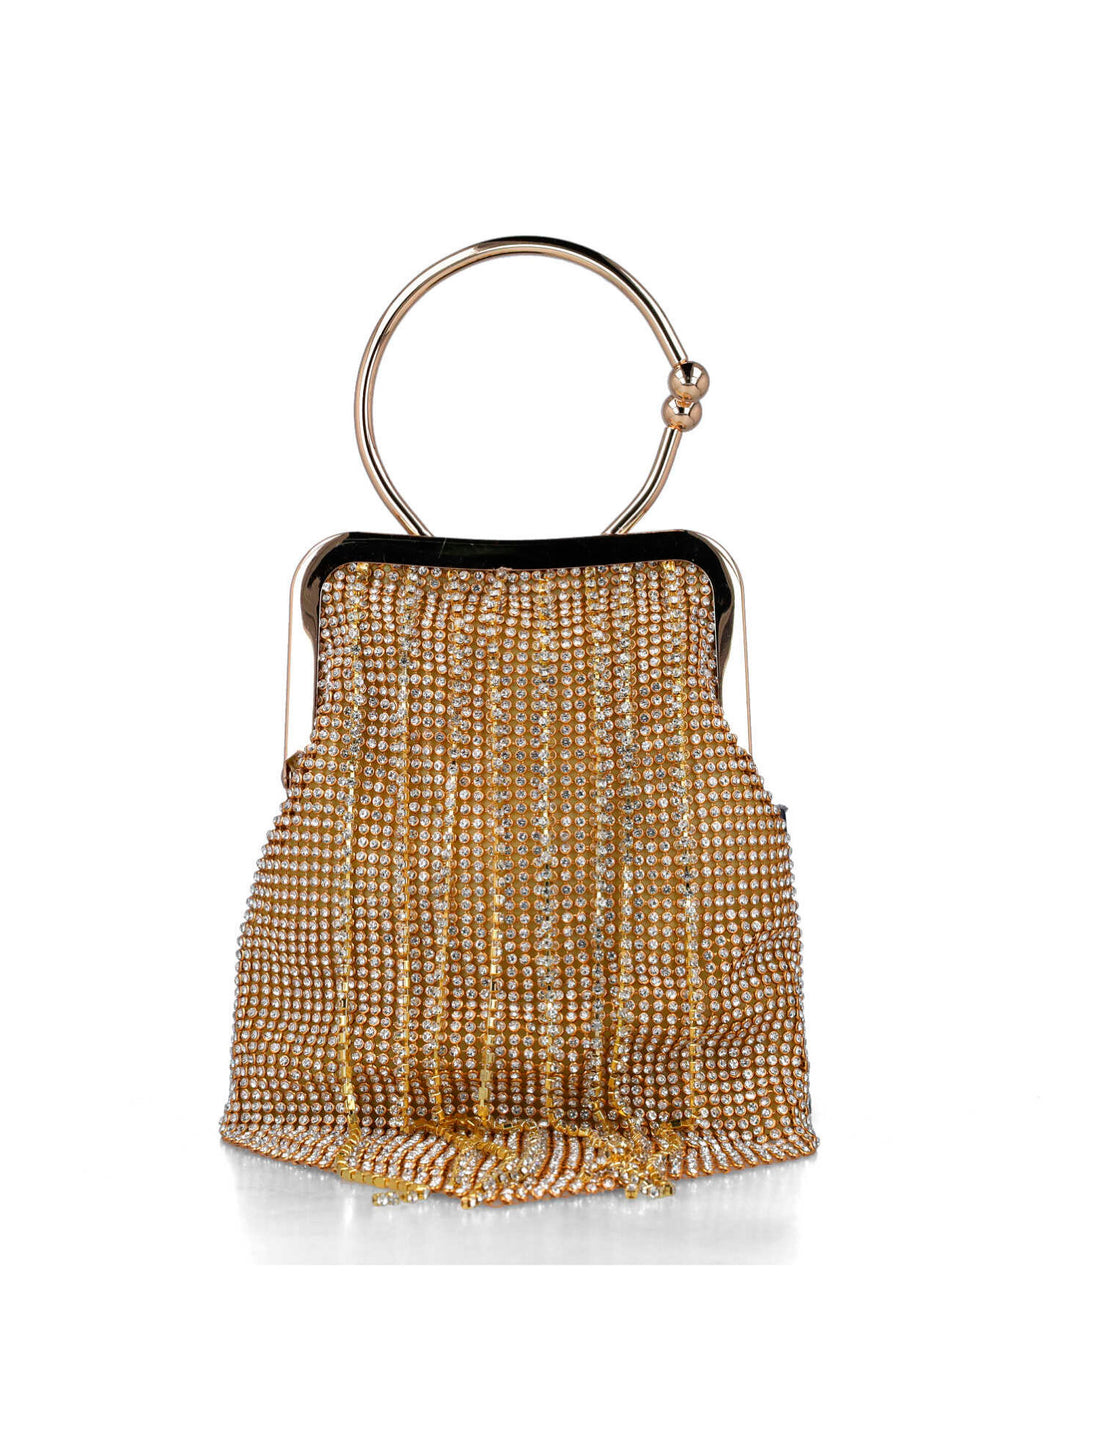 Embellished Handbag With Round Handles_85687_00_01